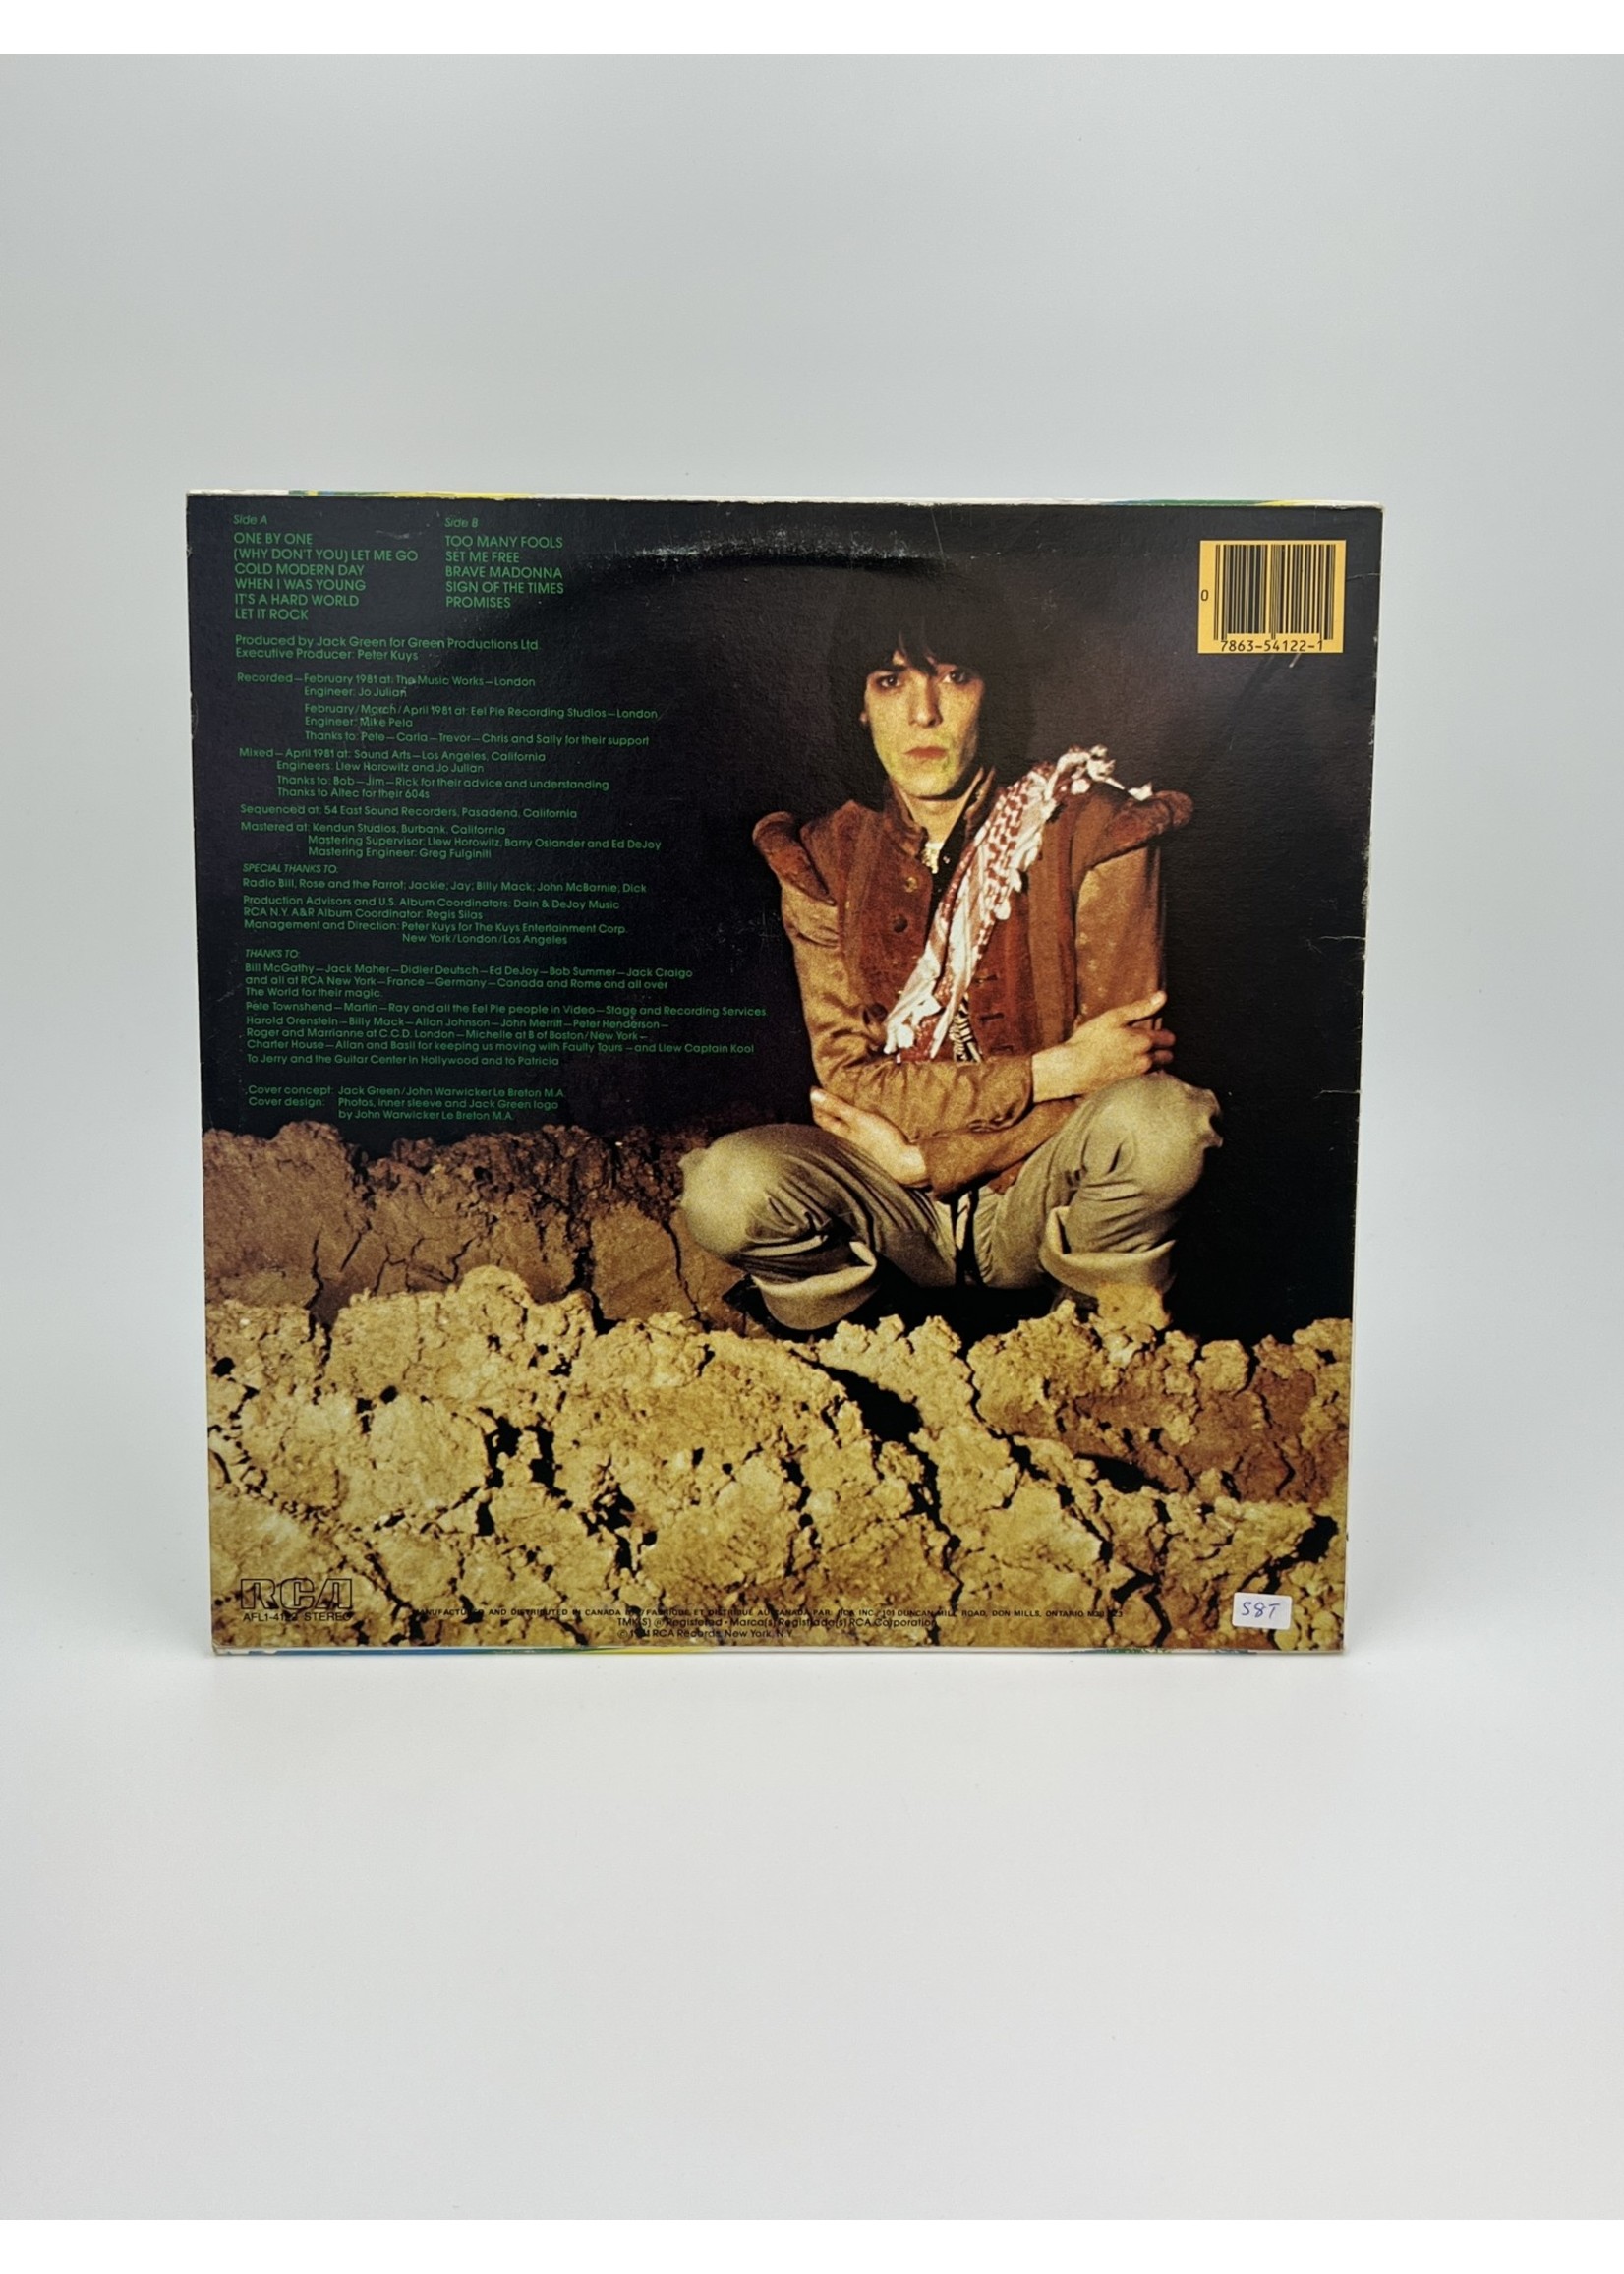 LP Jack Green Reverse Logic LP Record